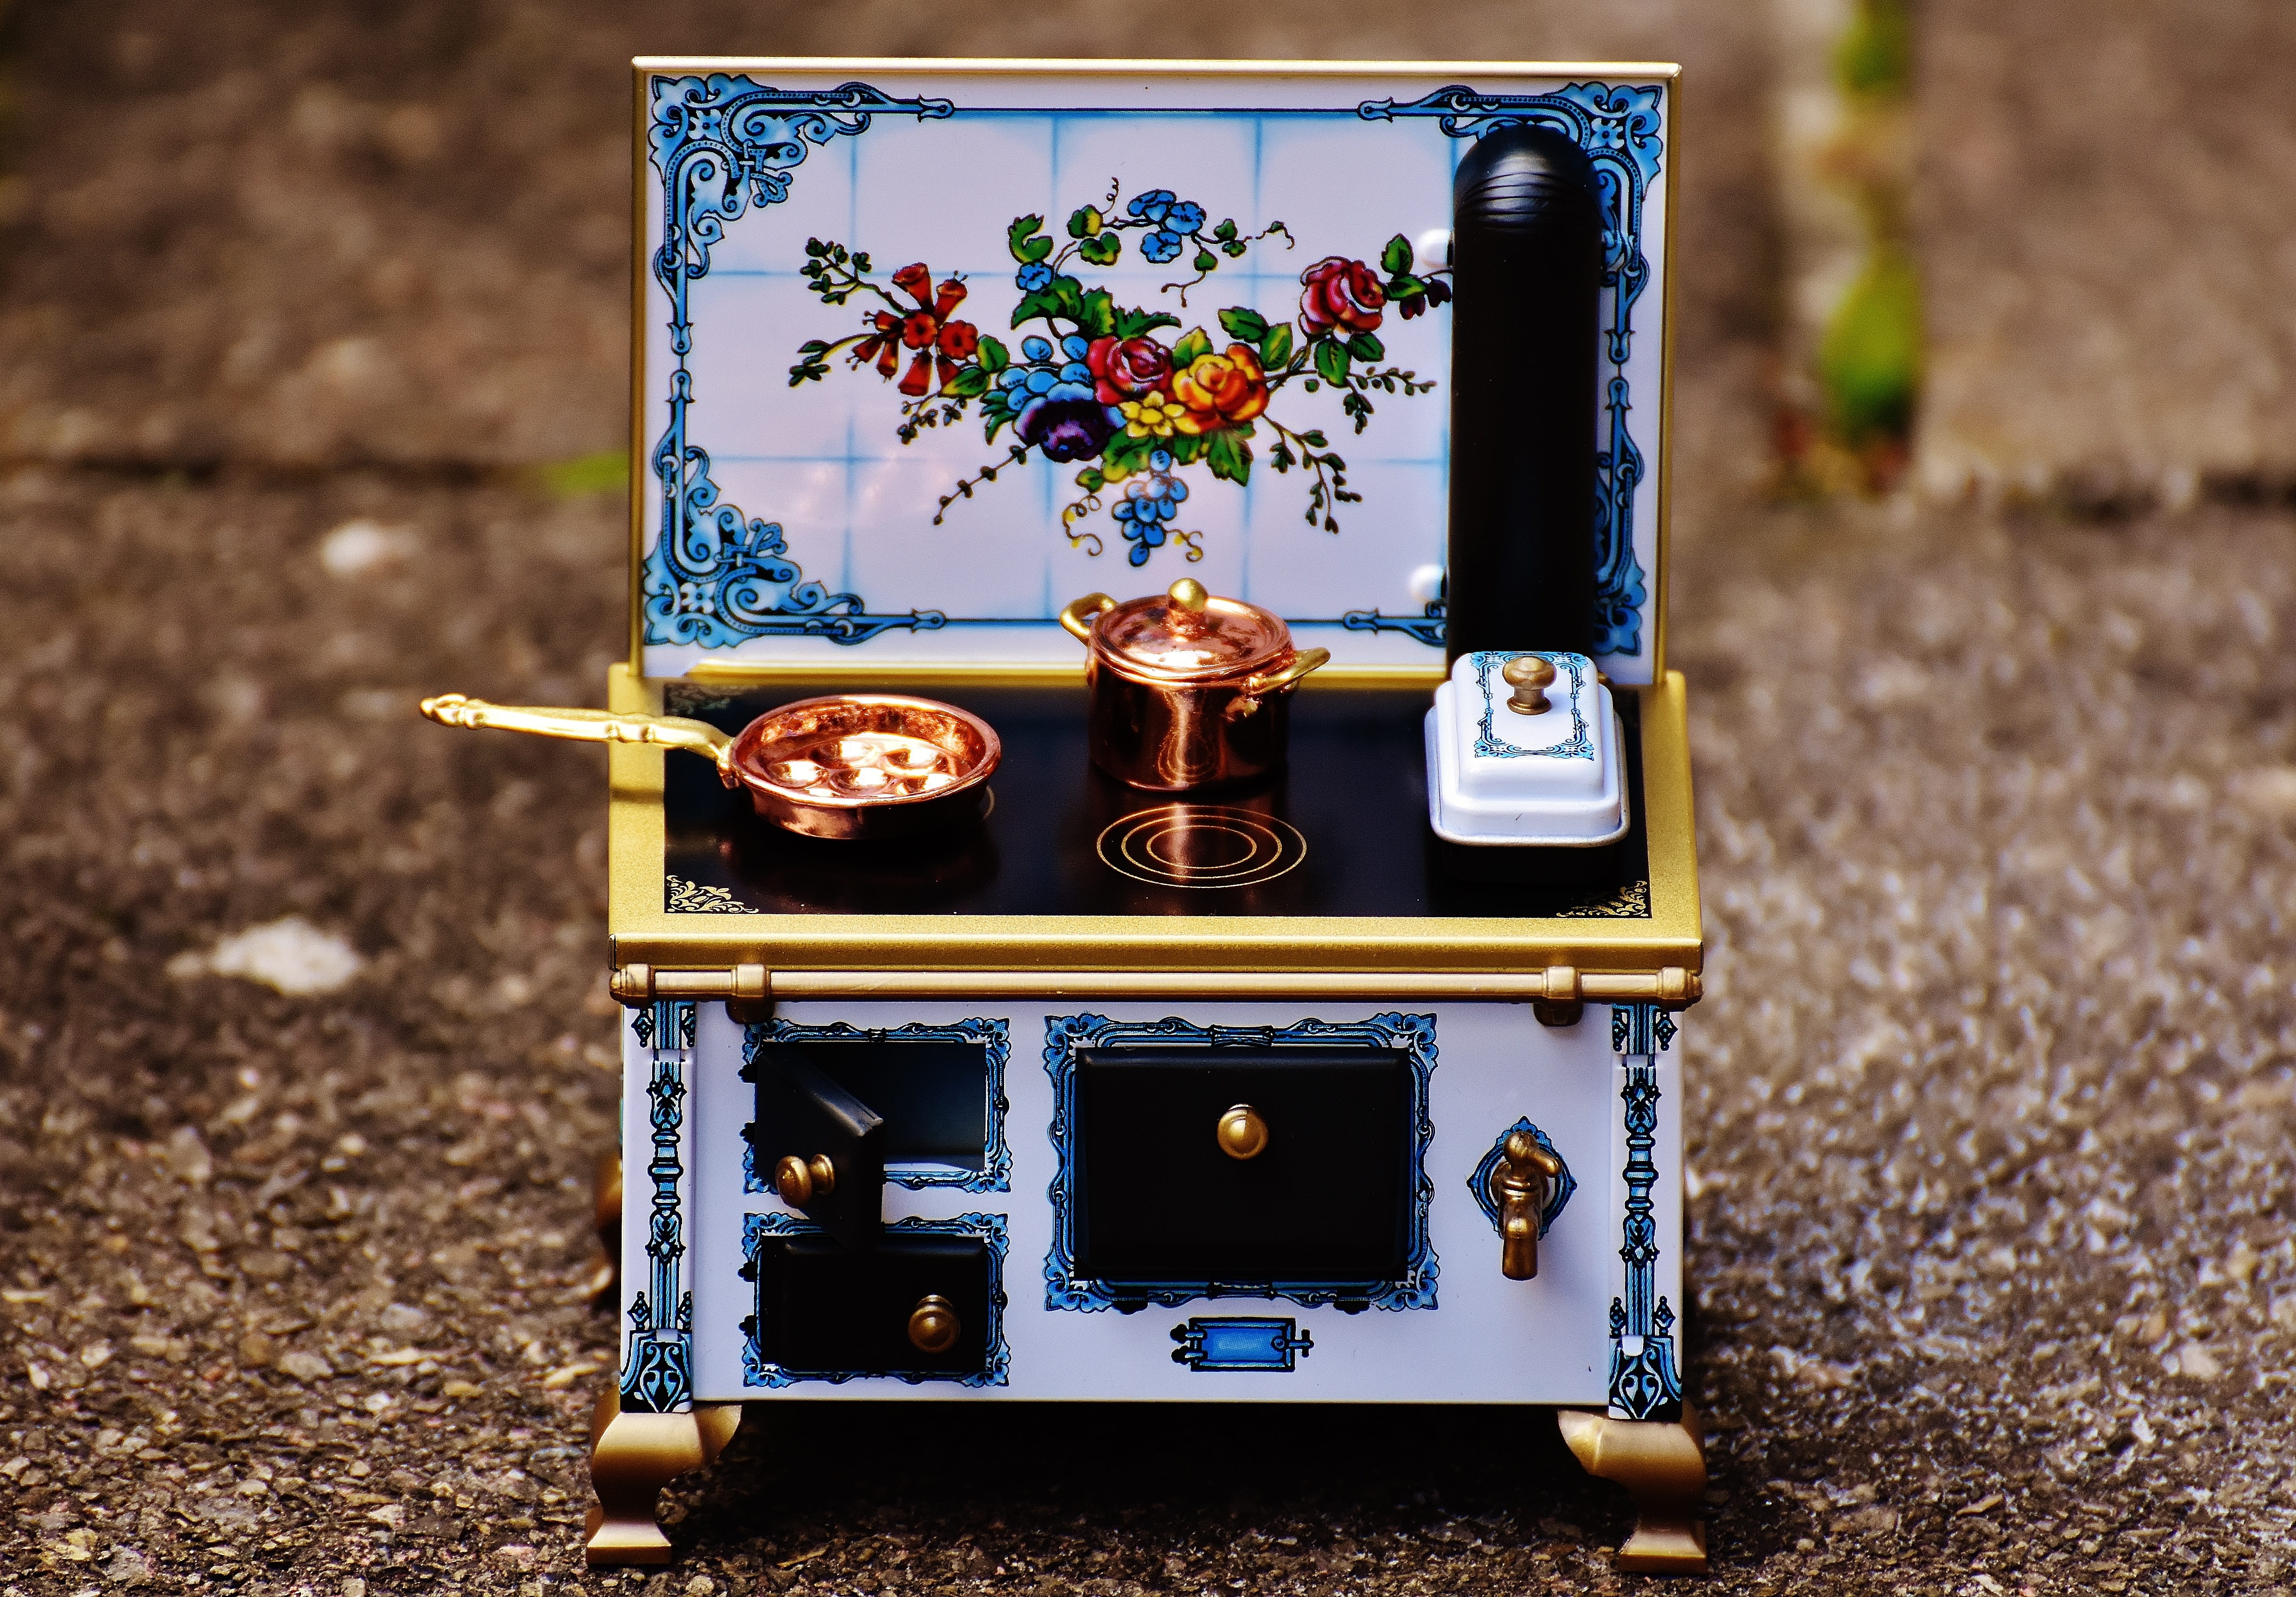 selective focus photography of miniature kitchen playset, stove